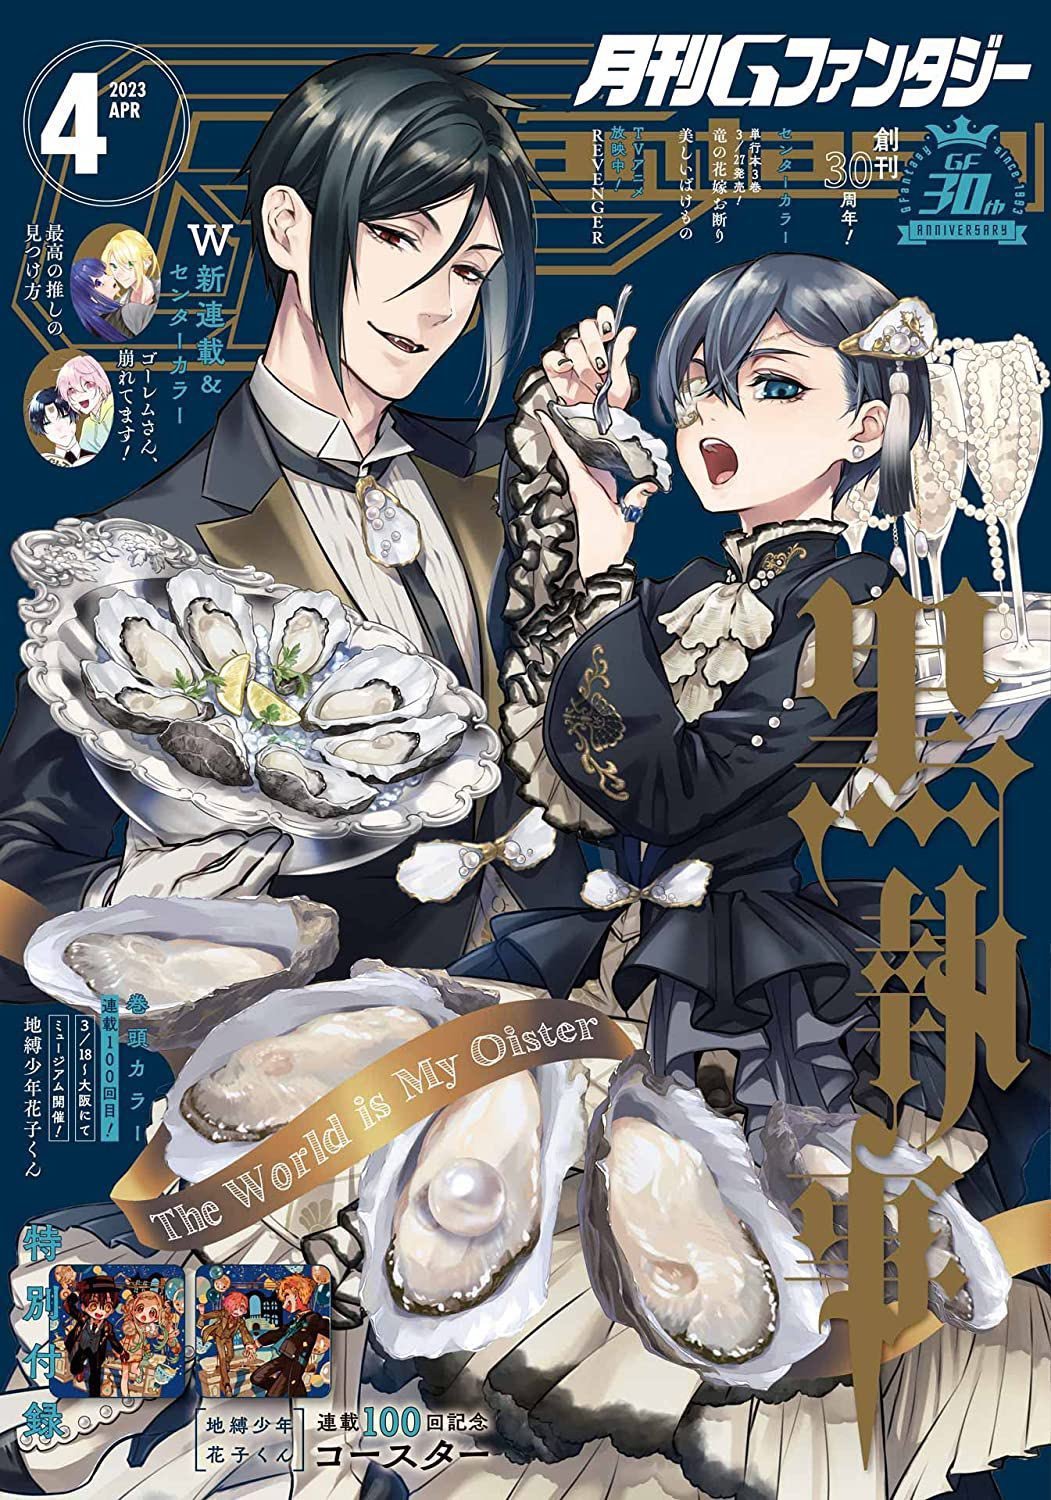 Ciel Phantomhive Kuroshitsuji Black Butler Anime Manga Poster for